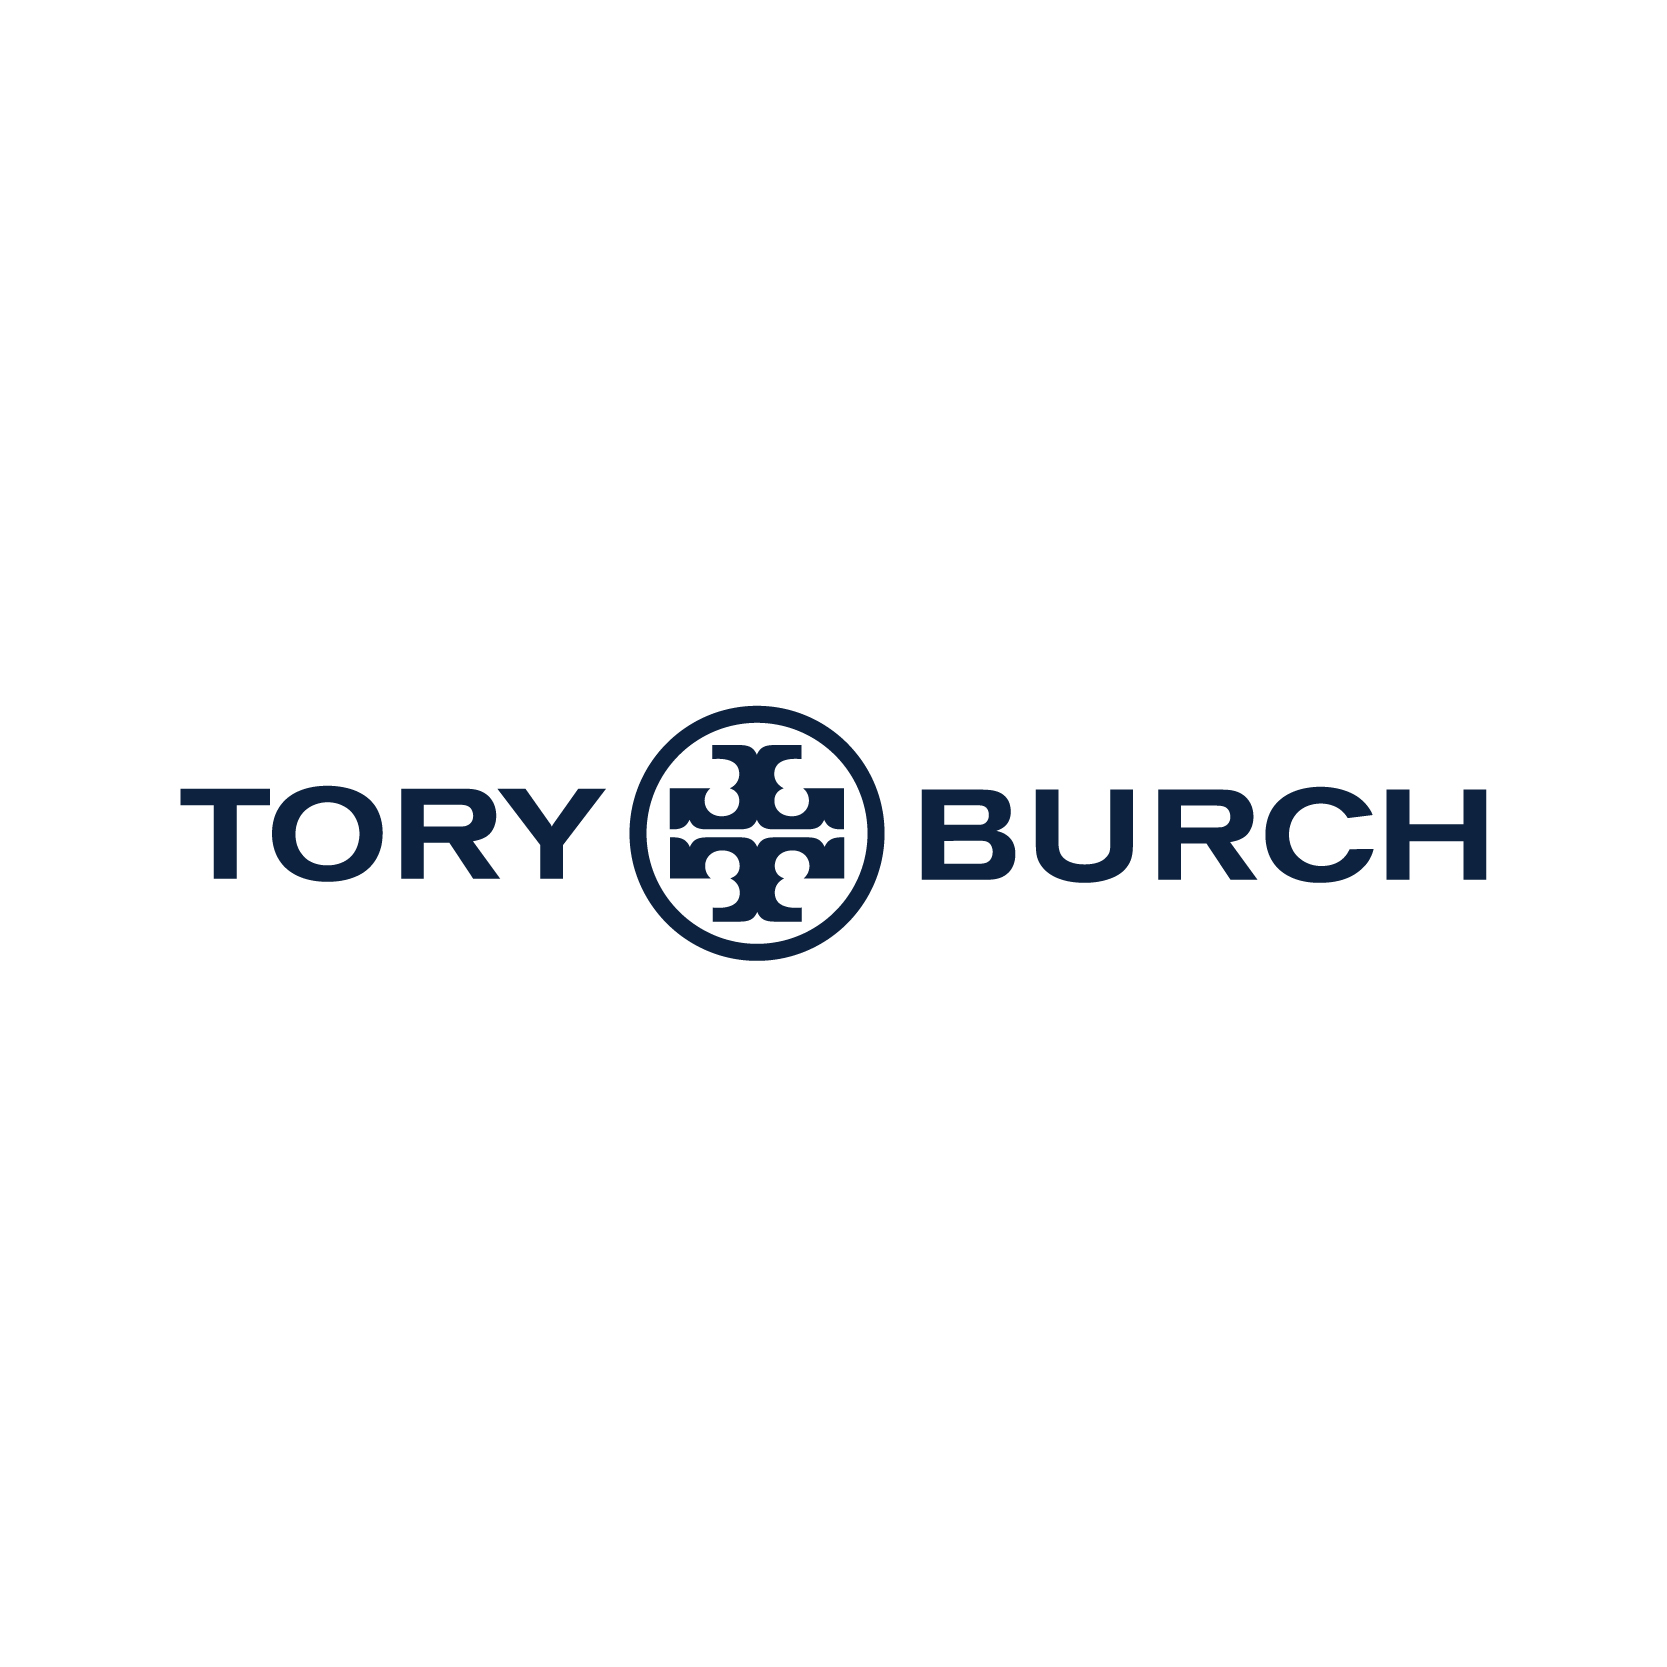 Tory Burch プロモーションコード 